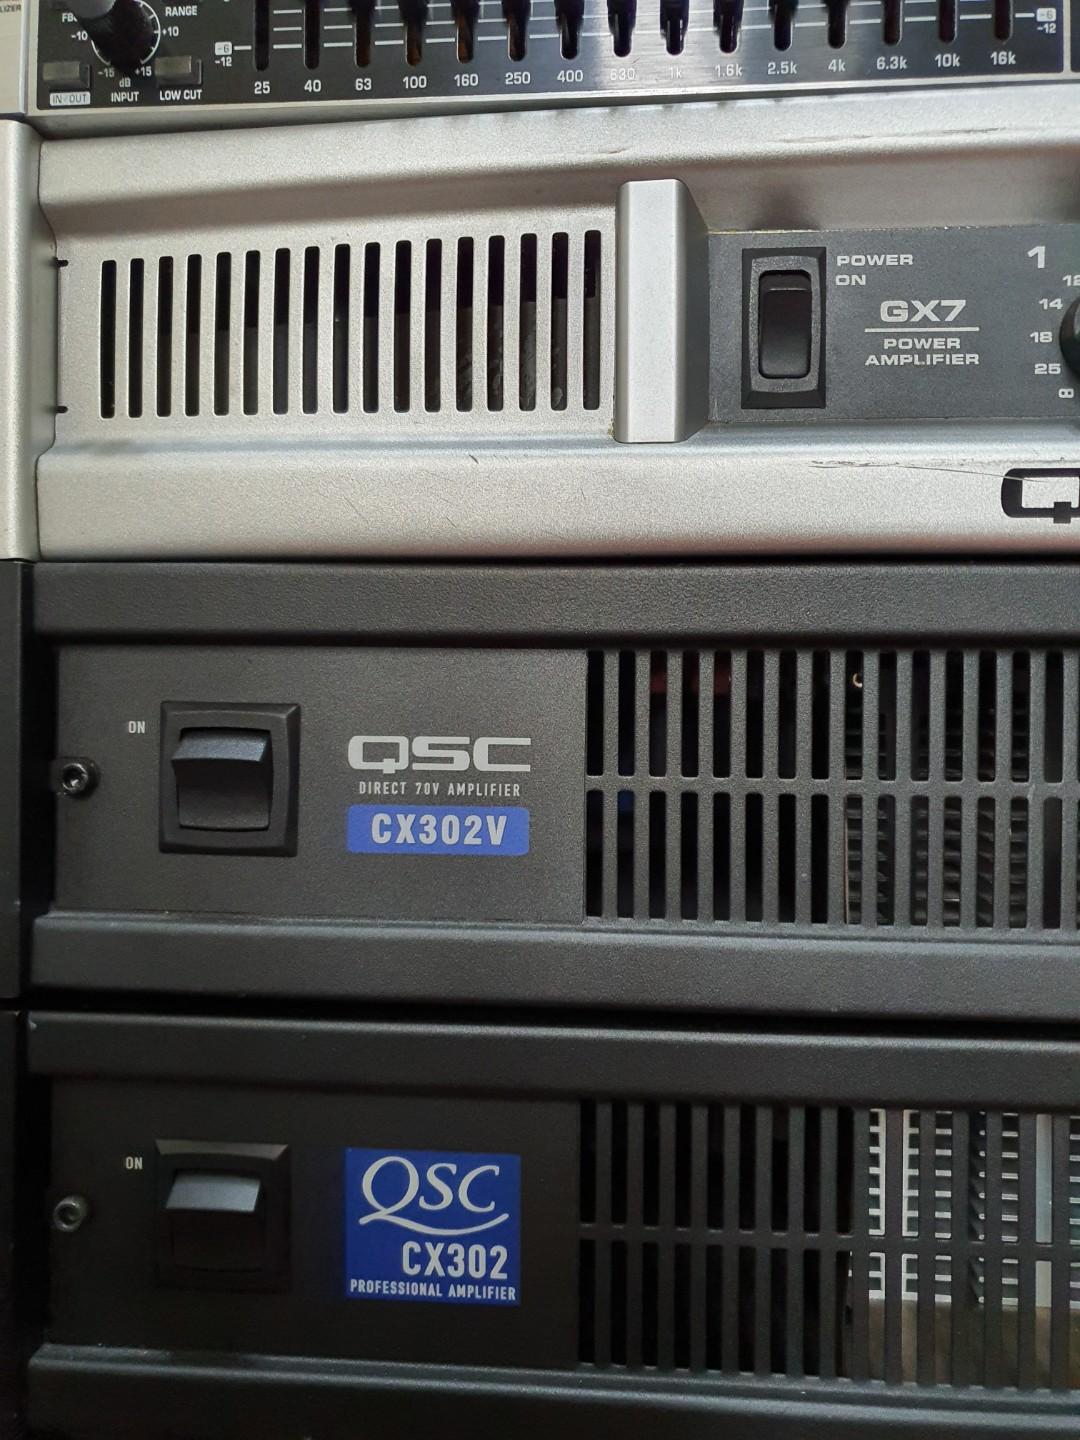 Qsc cx302v amplifier, TV  Home Appliances, TV  Entertainment, TV Parts   Accessories on Carousell